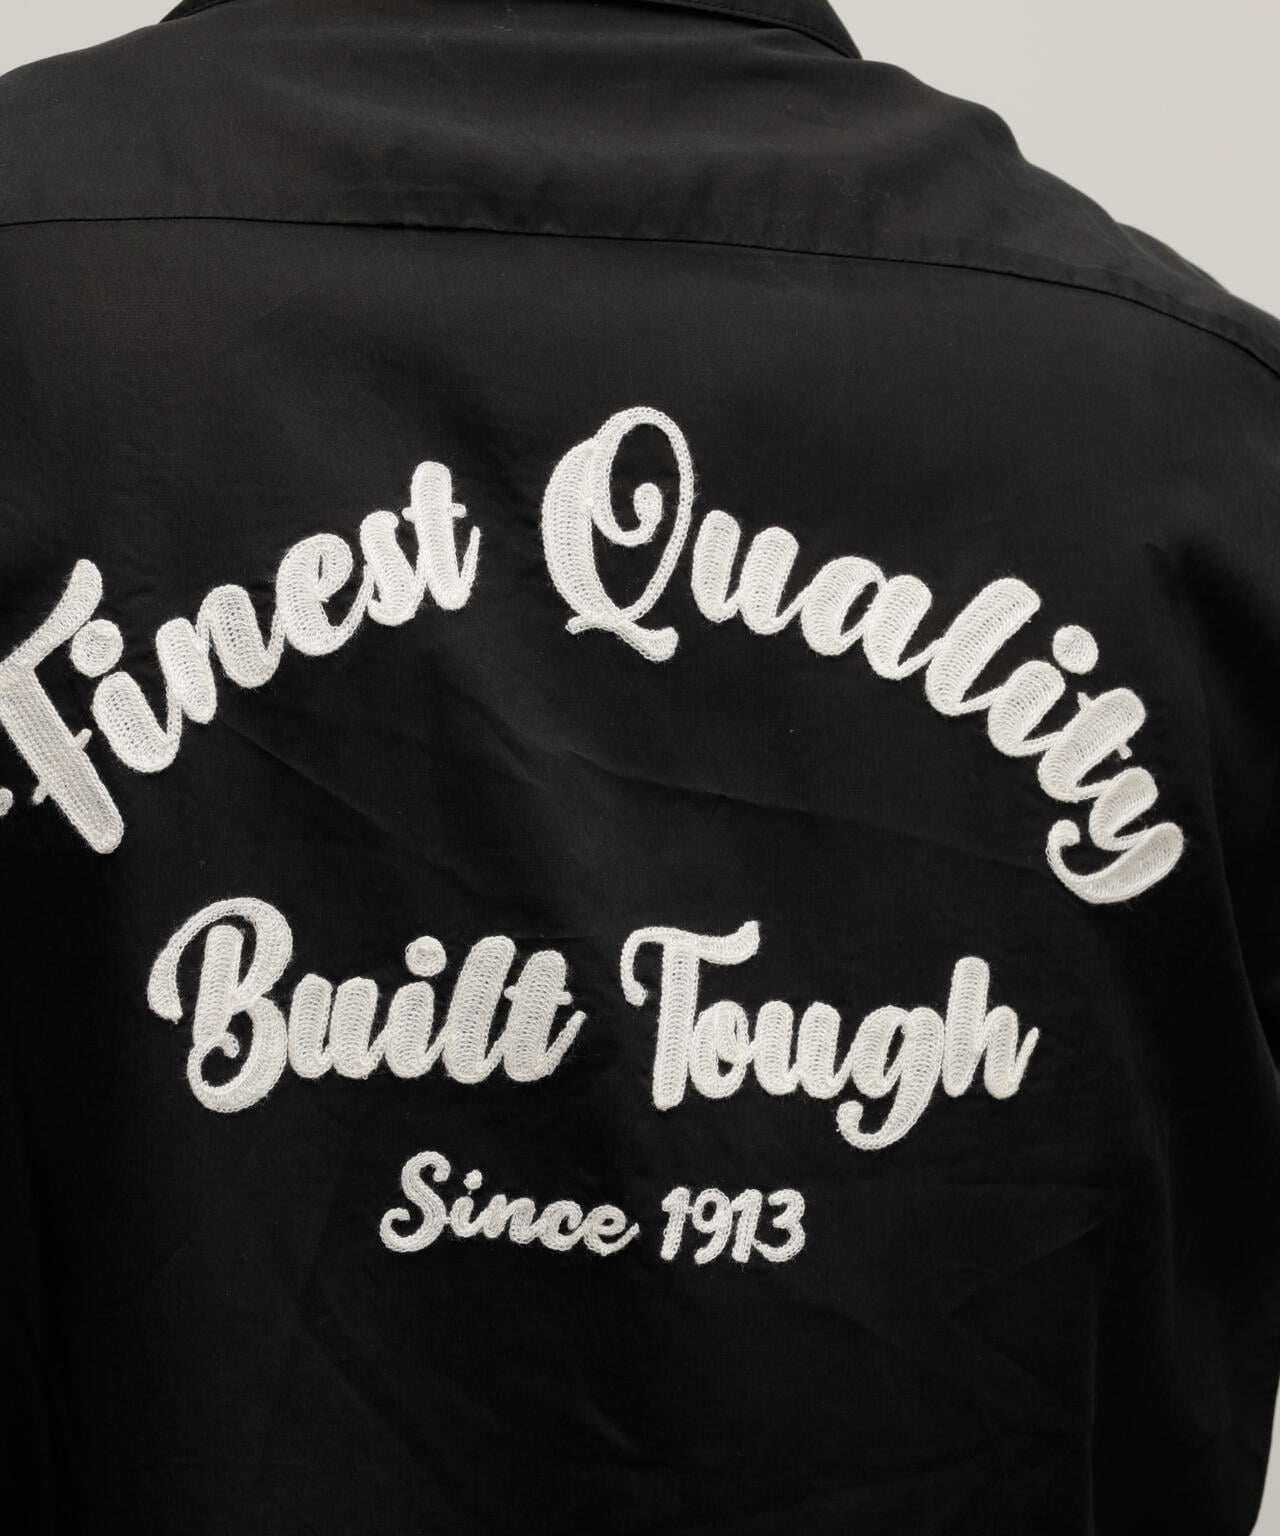 BOWLING SHIRT"FINEST QUALITY BUILT TOUGH"/ボーリングシャツ ファイネスト クオリティ ビルド タフ